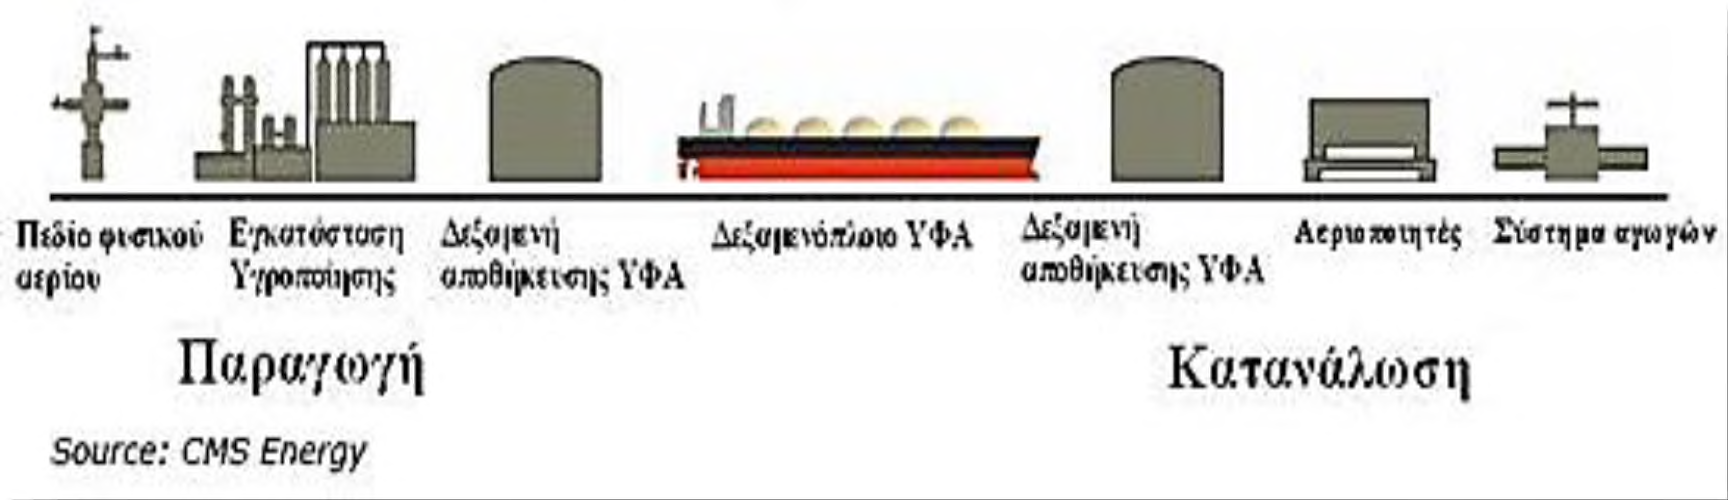 Boil off: Μία μικρή ποσότητα LNG εξατμίζεται από την δεξαμενή κατά την αποθήκευση, την ψύξη της δεξαμενής και τη διατήρηση της πίεσης στο εσωτερικό της σταθερή δεξαμενής και το LNG στο σημείο βρασμού